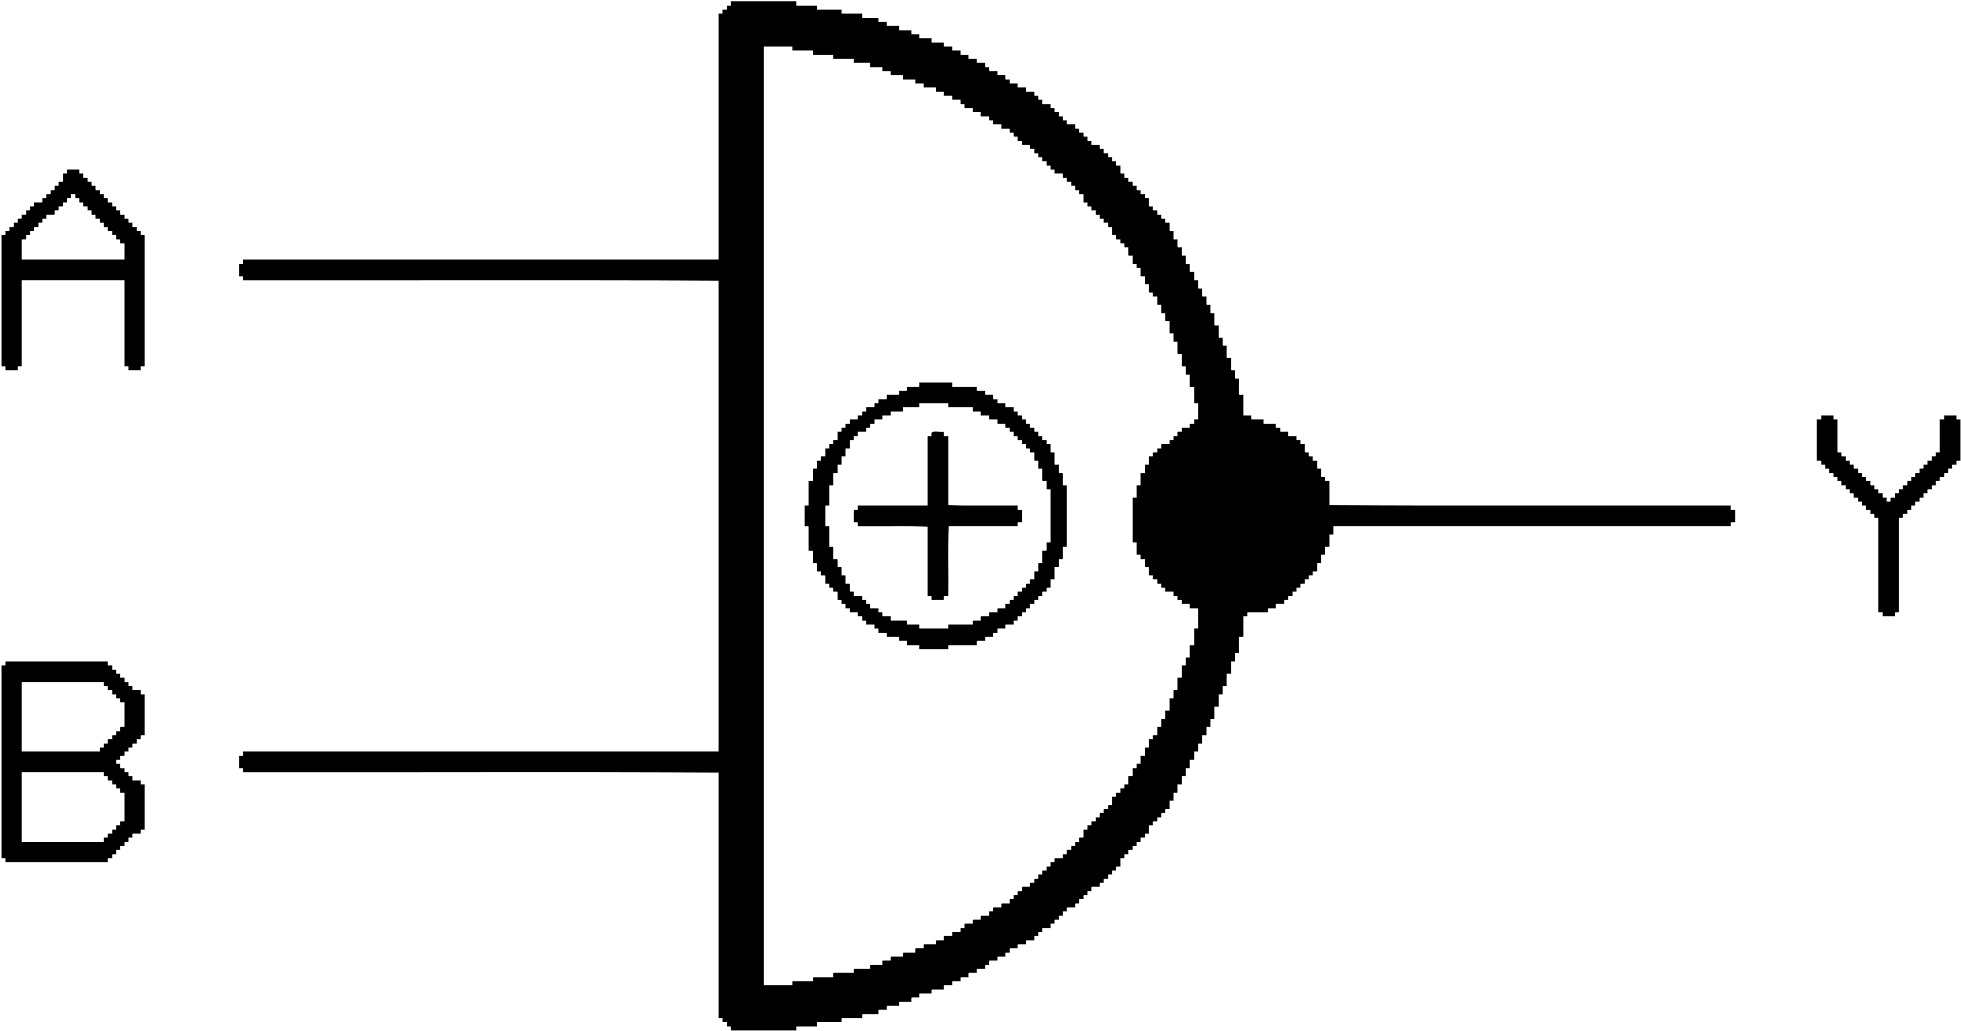 Open - Xor Logic Gate Symbol (2000x1074)